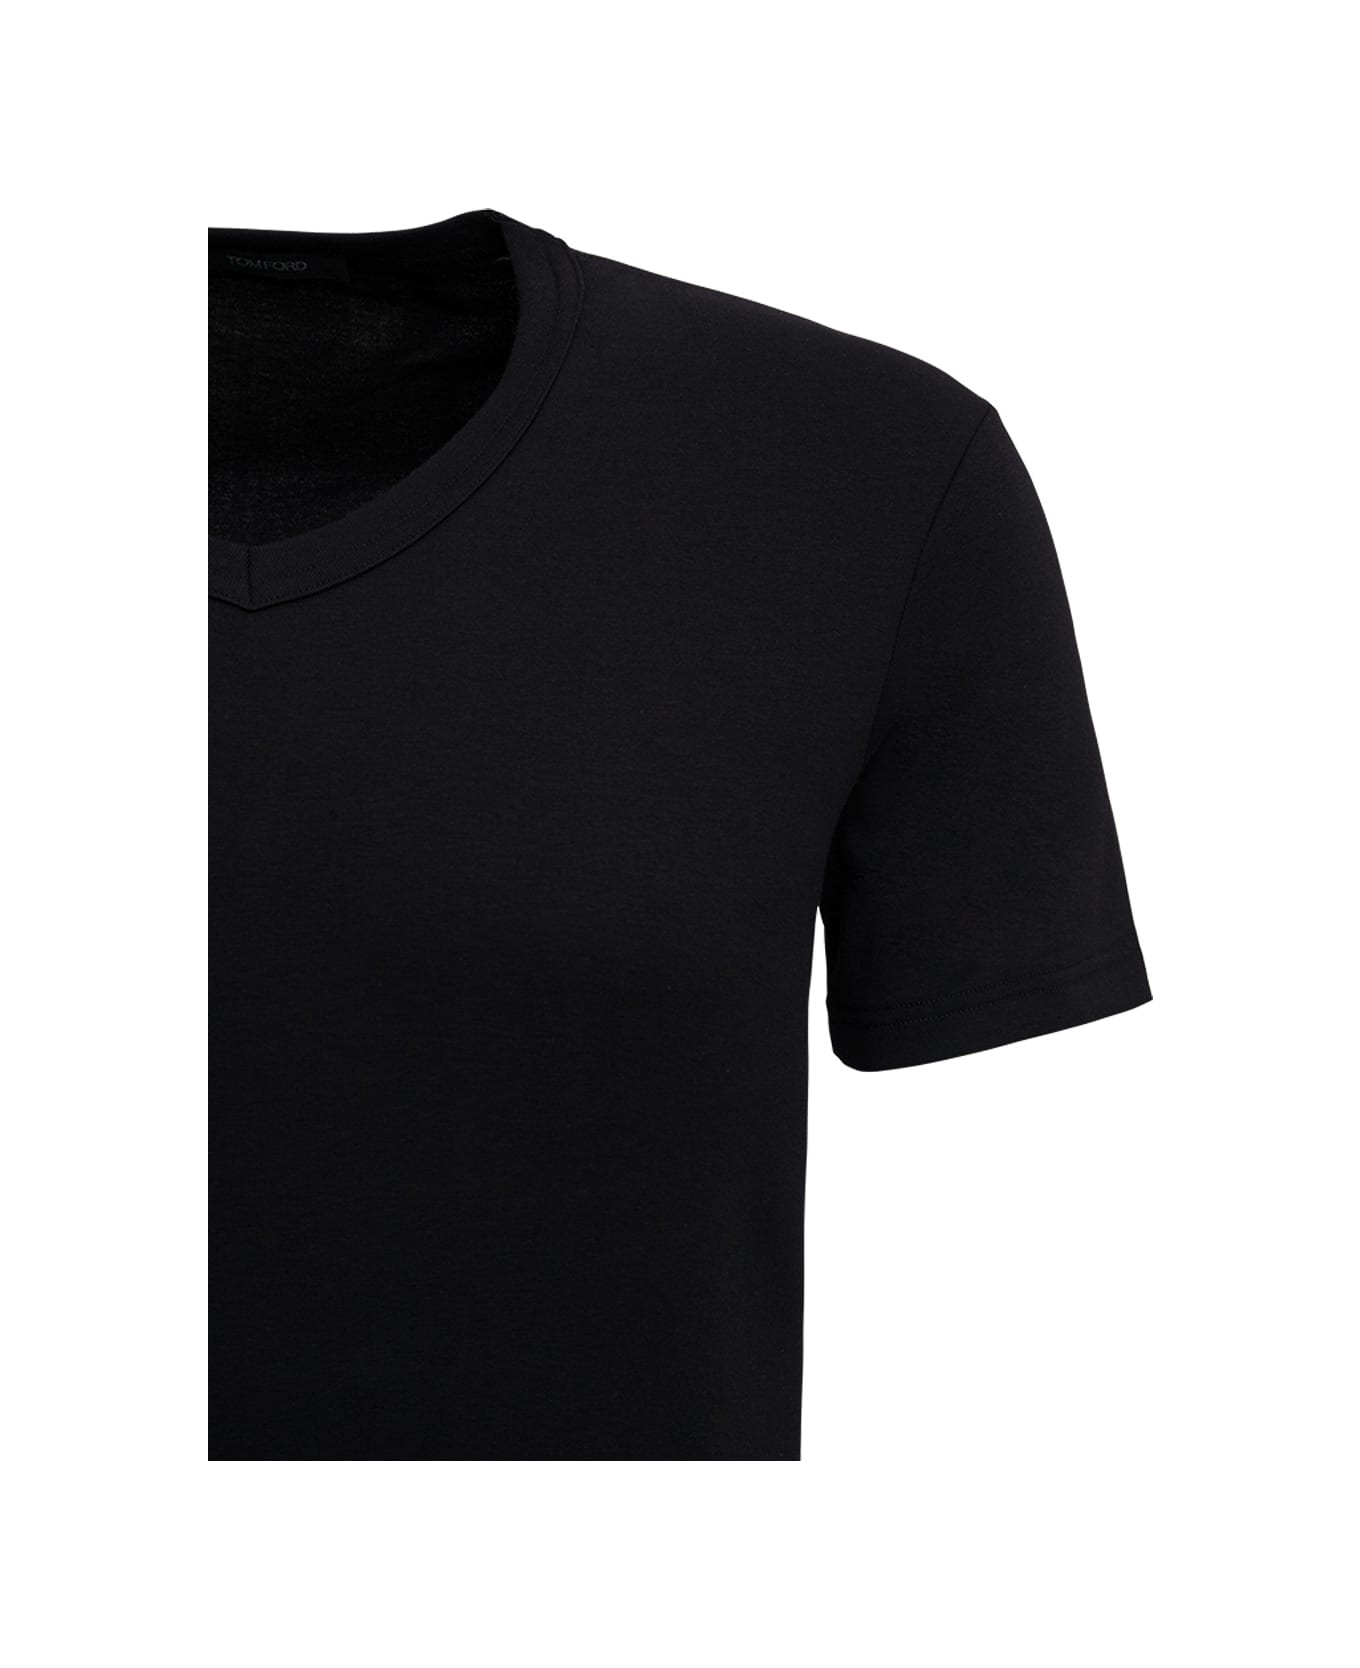 Tom Ford Black V-neck T-shirt Short Sleeves In Cotton Stretch Man - Black